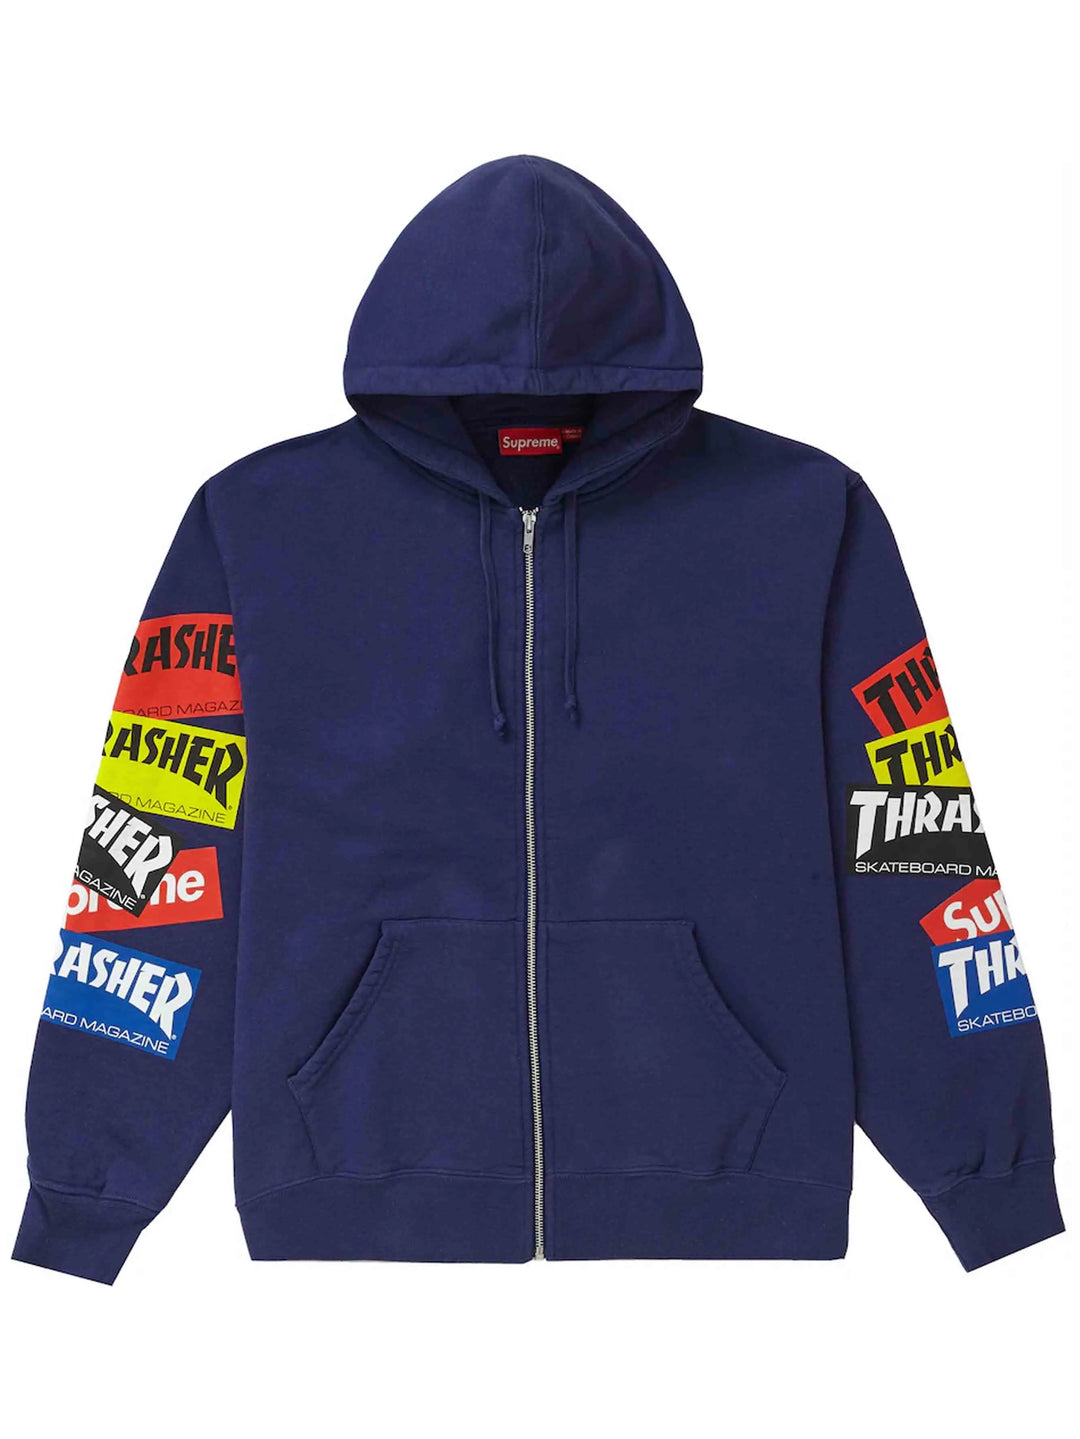 Copy of Supreme Thrasher Multi Logo Zip Up Hooded Sweatshirt Washed Grey (FW21) Prior